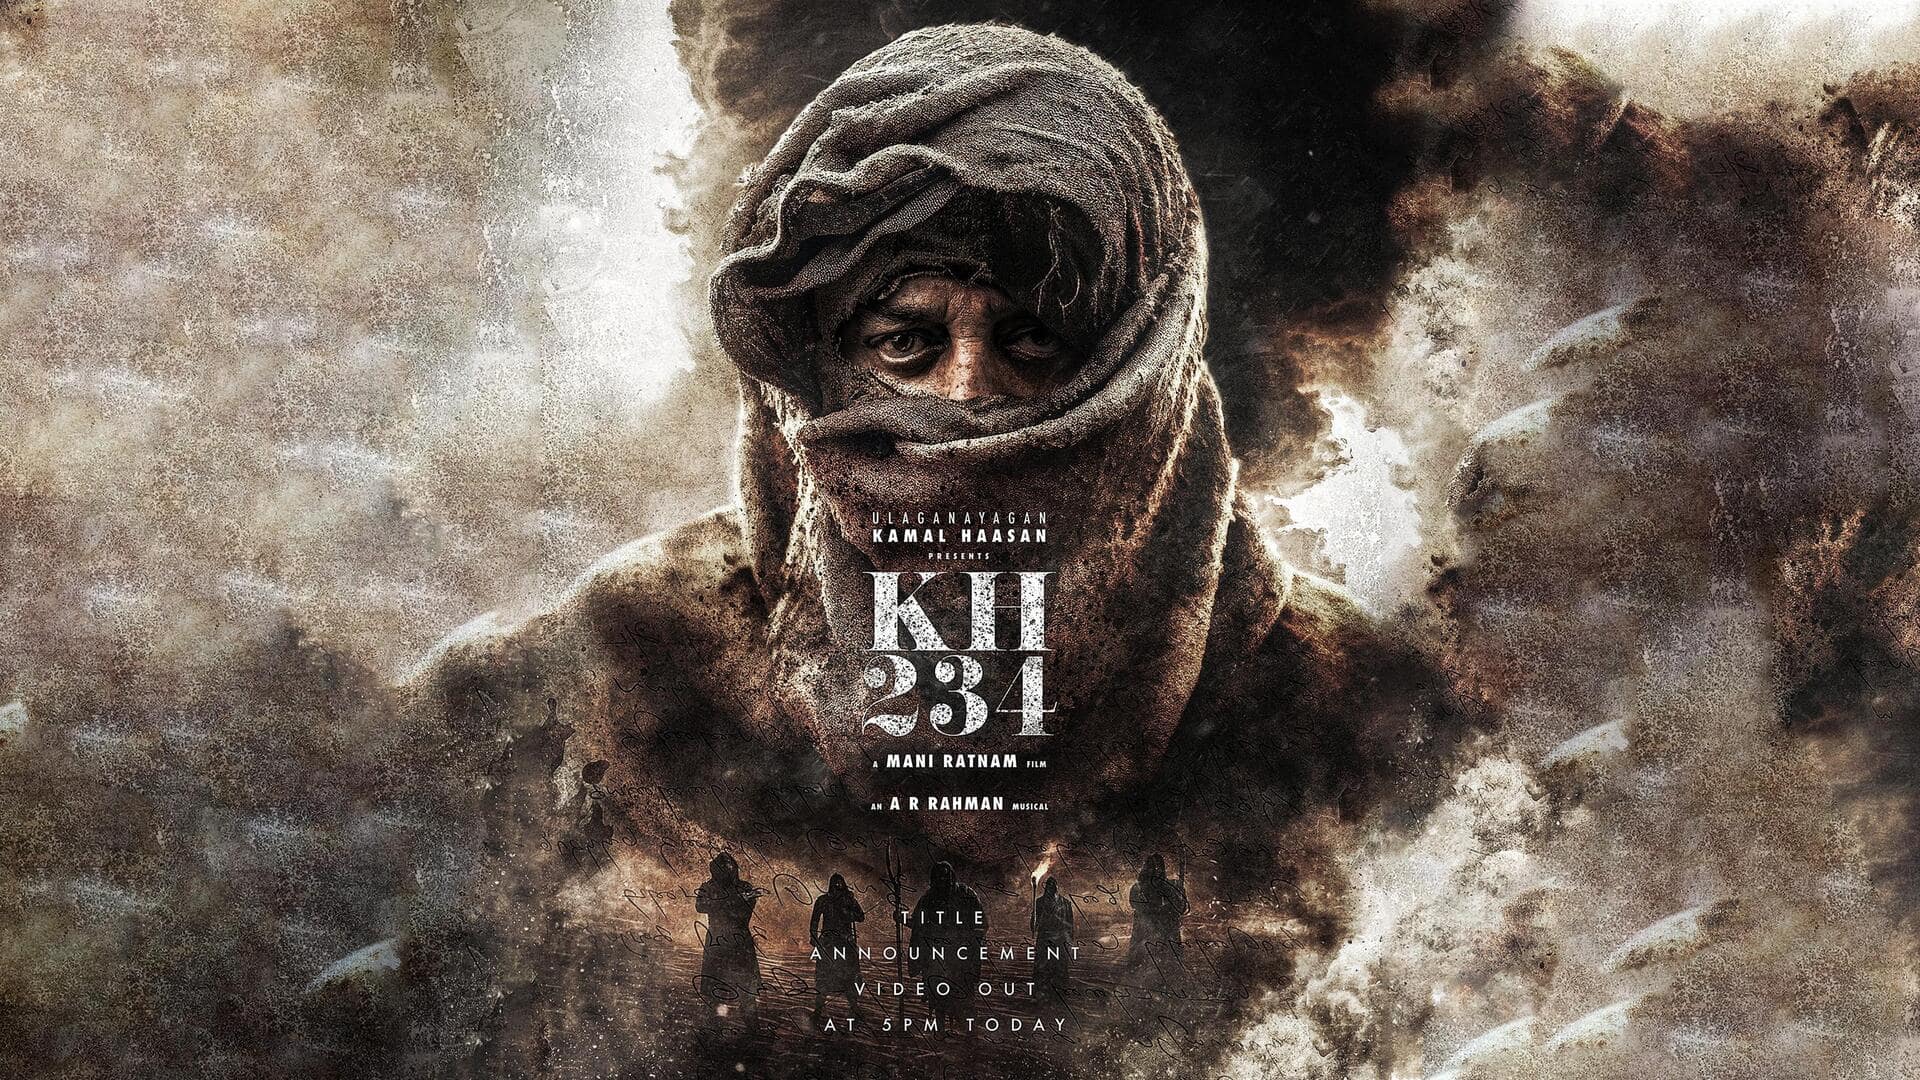 'Thug Life': Kamal Haasan looks invincible in new poster